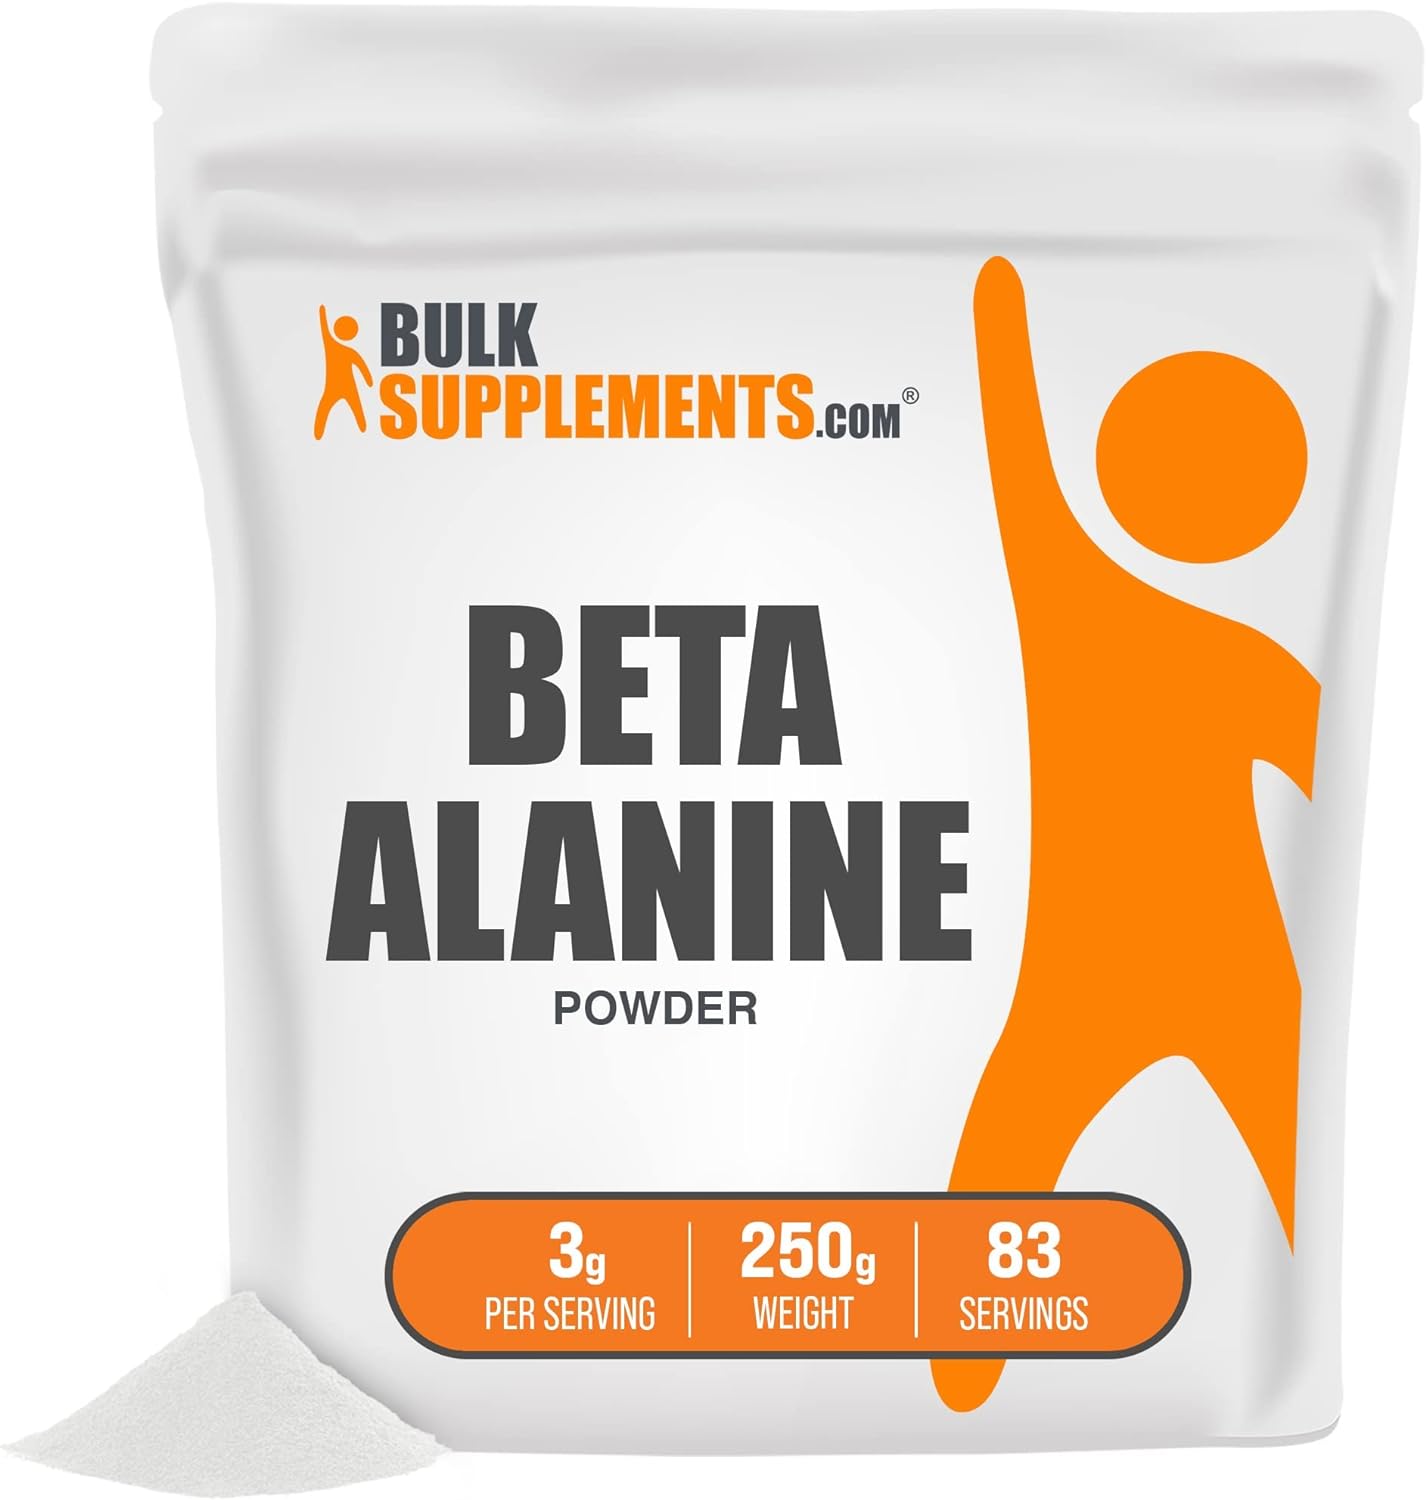 BULKSUPPLEMENTS.COM Beta Alanine Powder - Beta Alanine Supplement, Bet